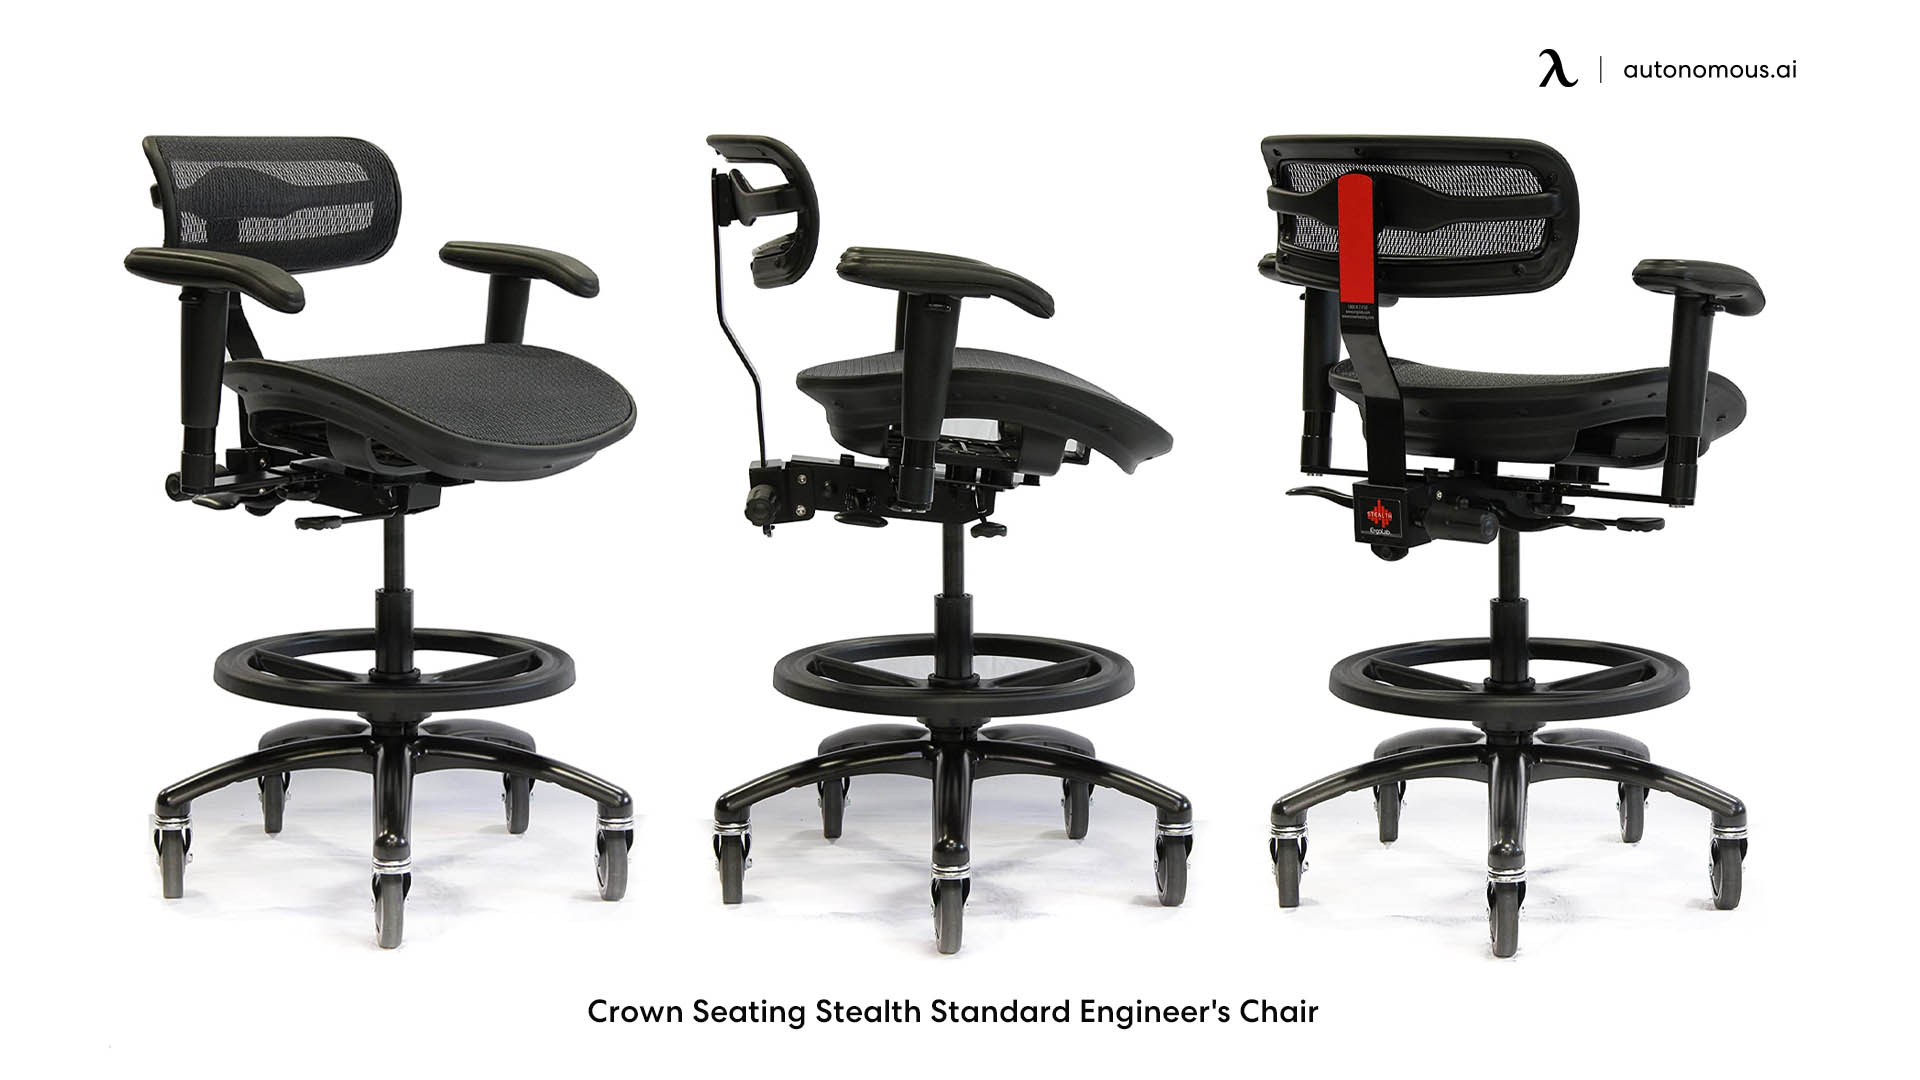 Crown Seating Stealth Standard Engineer's Chair